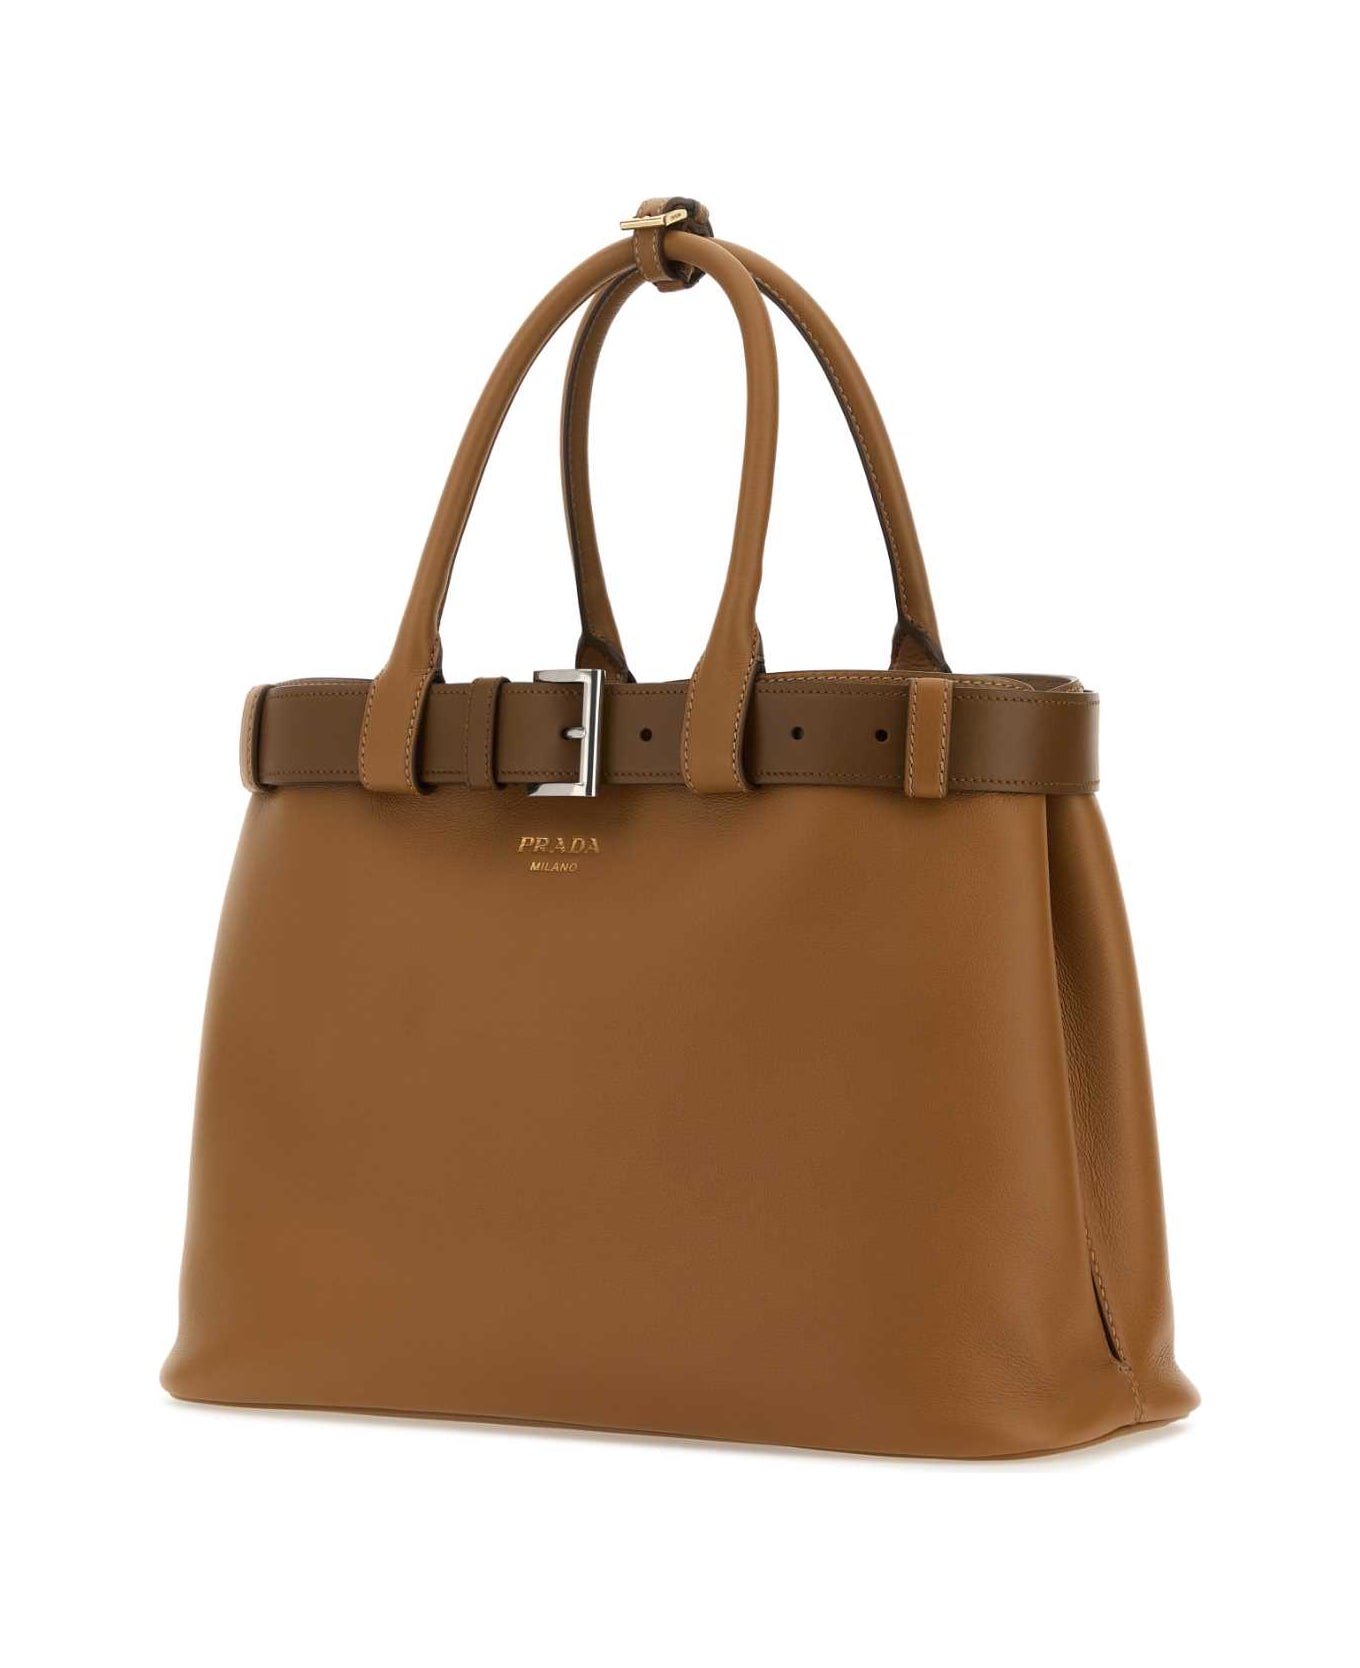 Prada Caramel Leather Prada Buckle Large Handbag - CARAMEL0